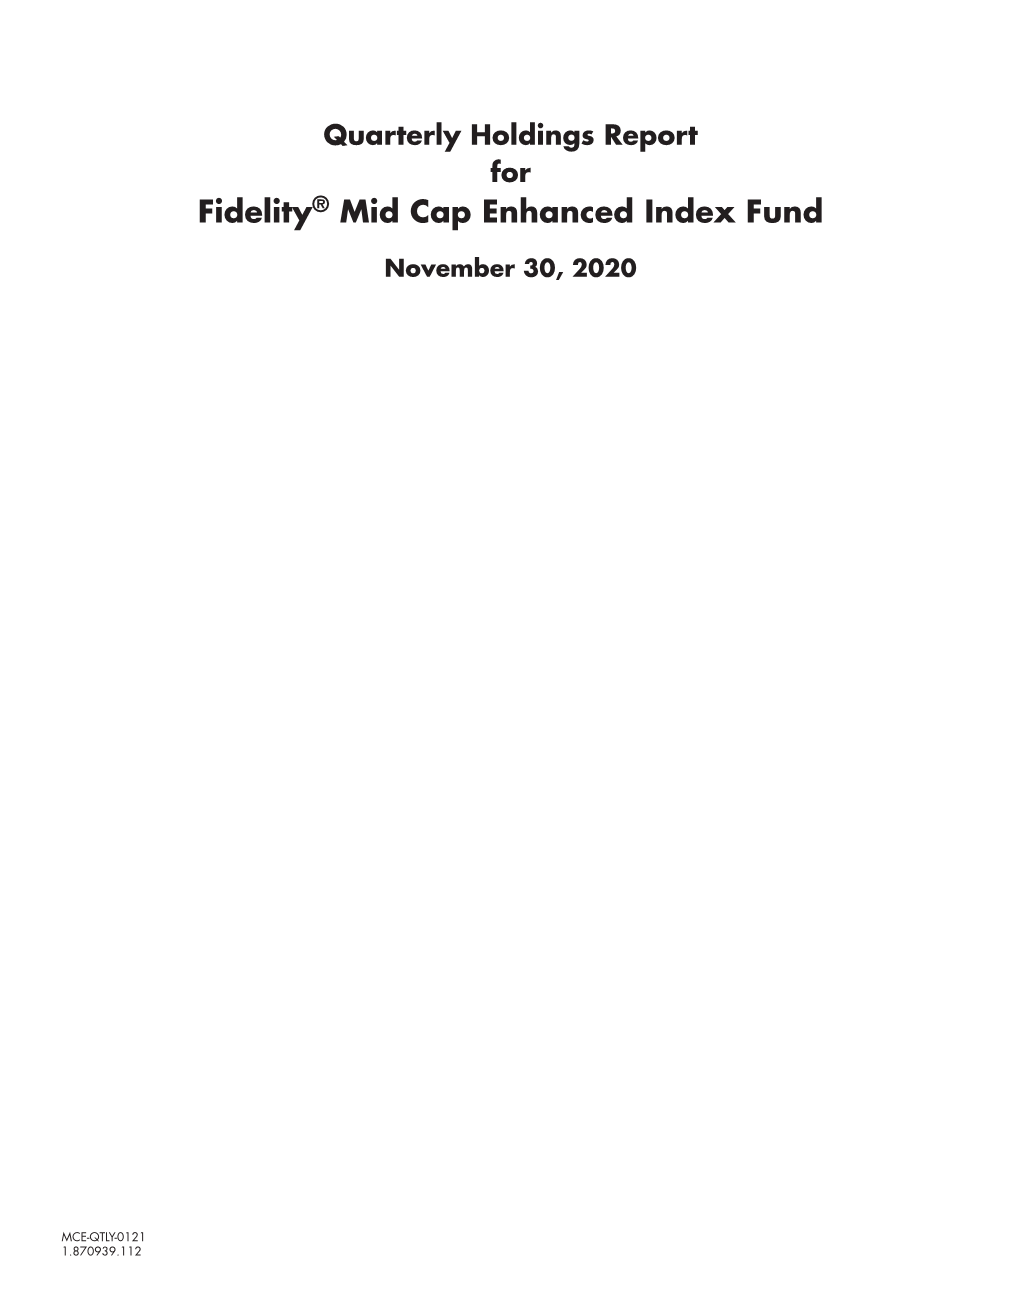 Fidelity® Mid Cap Enhanced Index Fund